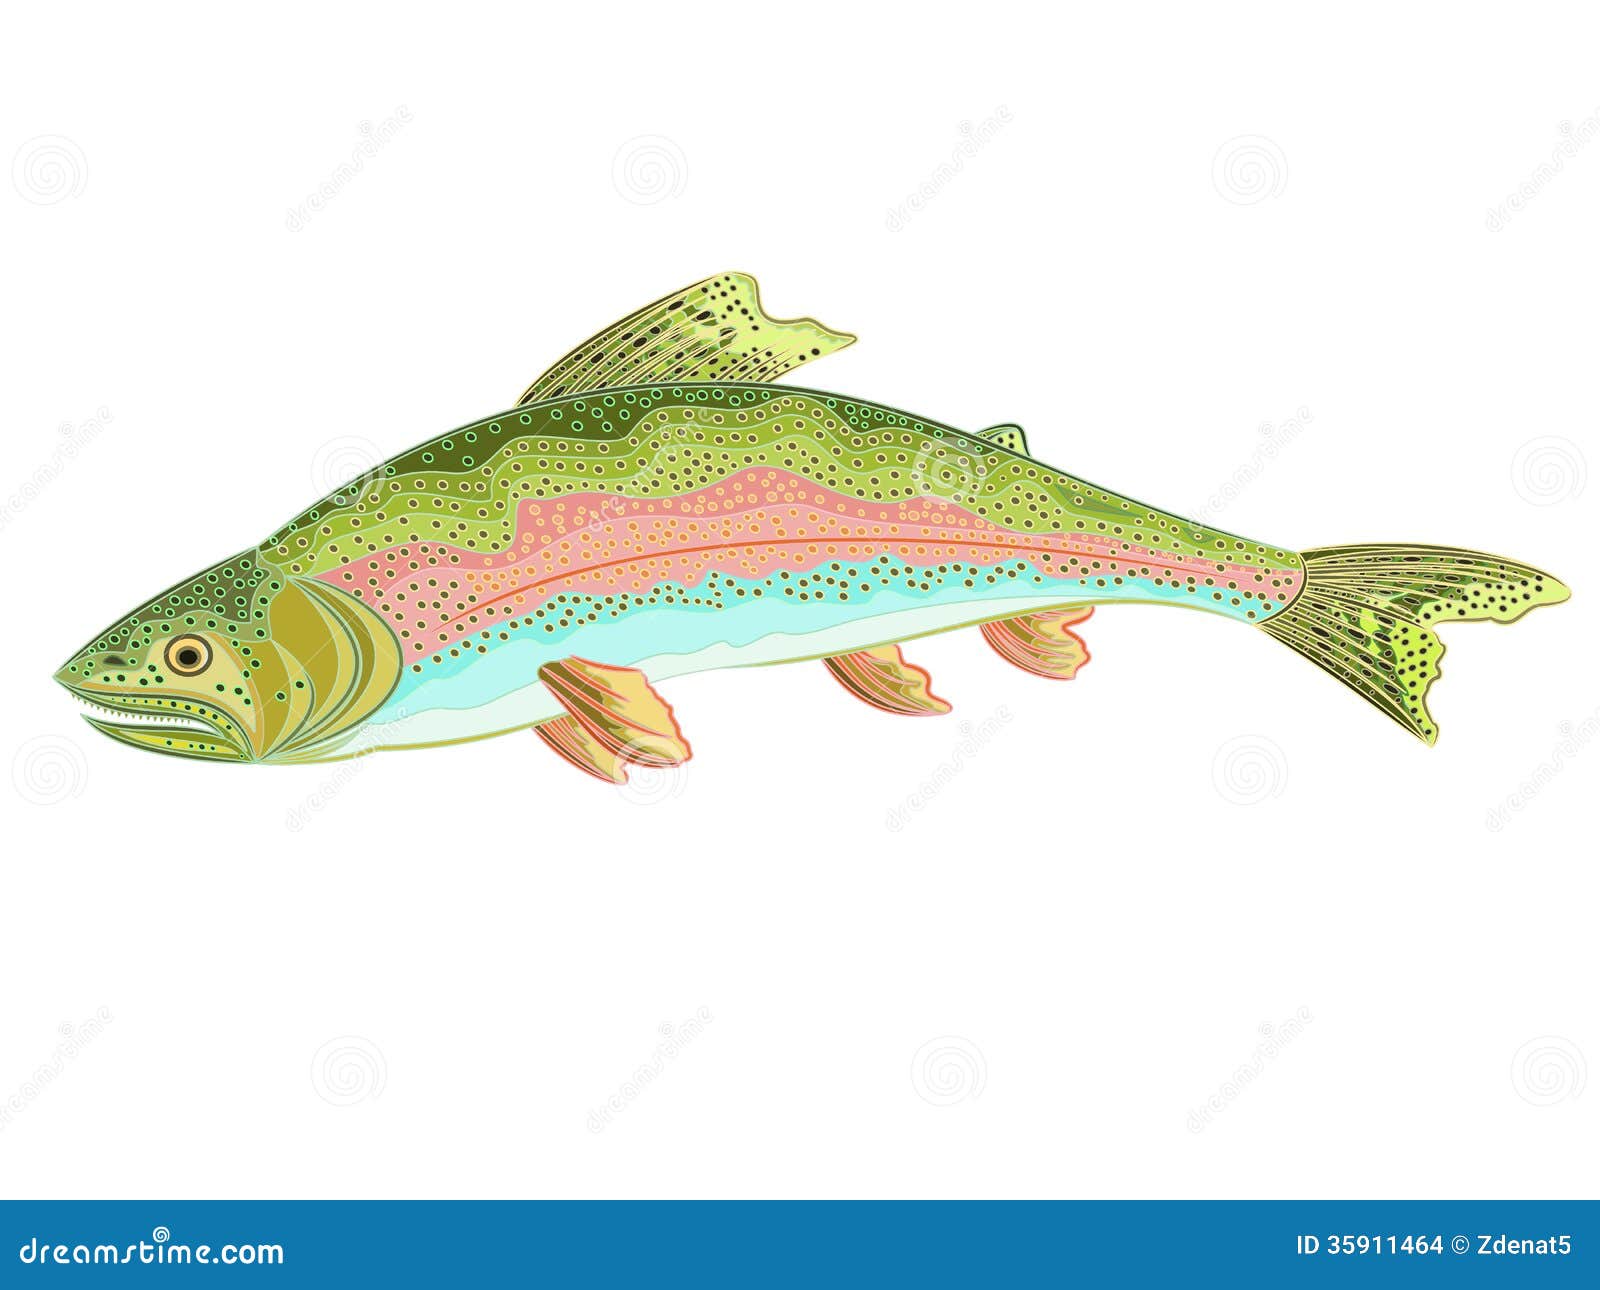 clipart rainbow trout - photo #24